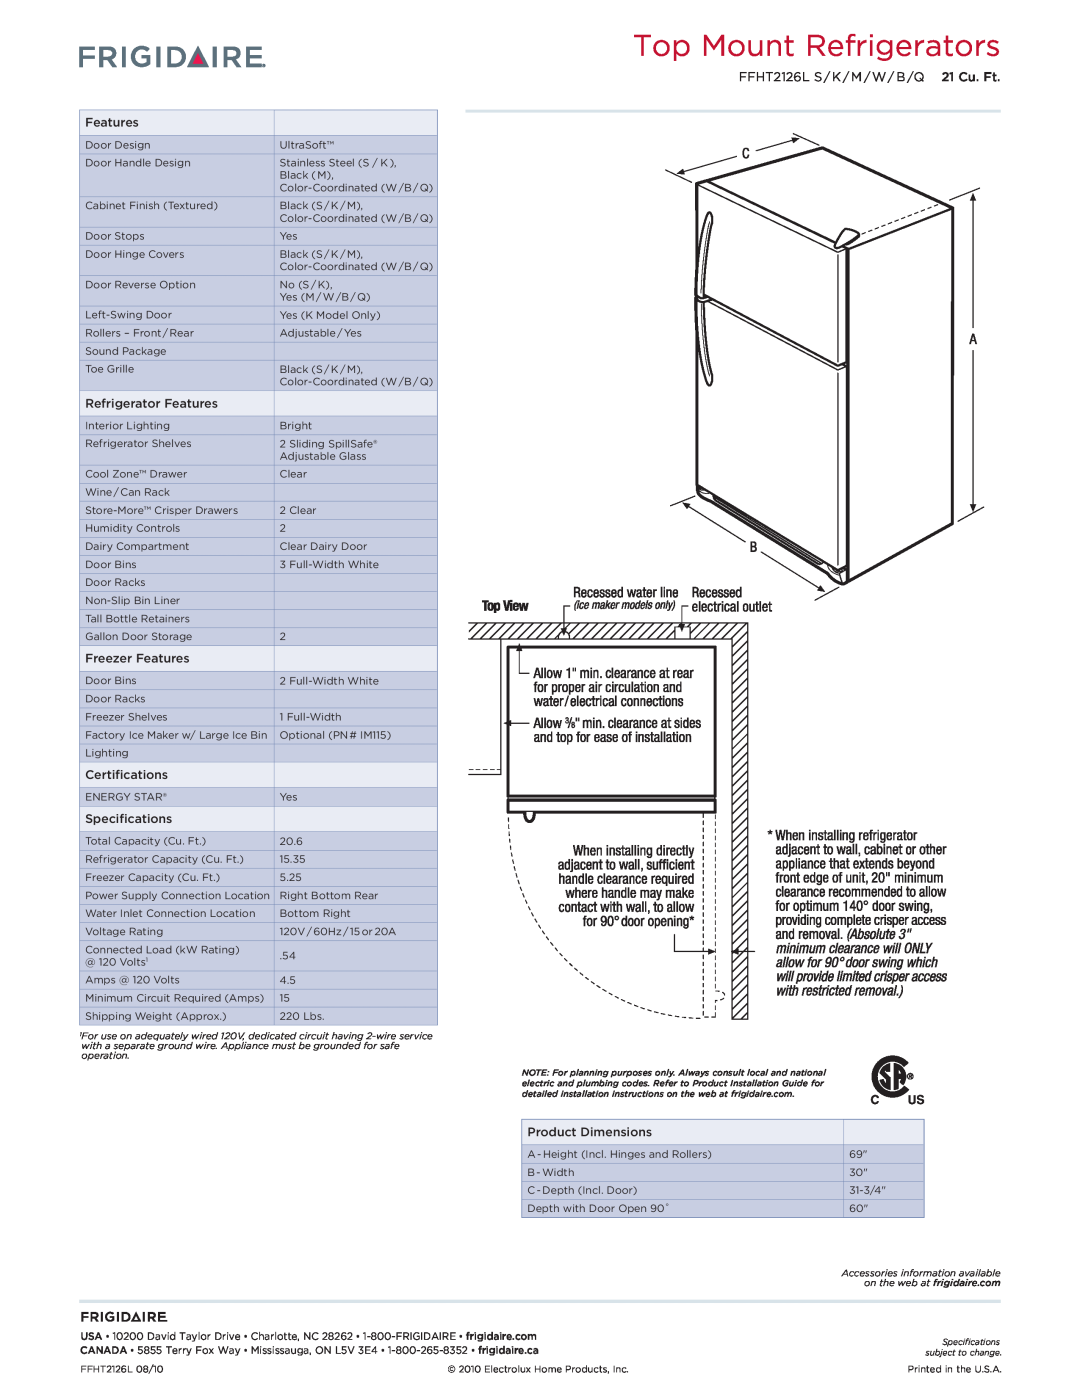 Frigidaire dimensions Top Mount Refrigerators, FFHT2126L S / K / M / W / B /Q 21 Cu. Ft 